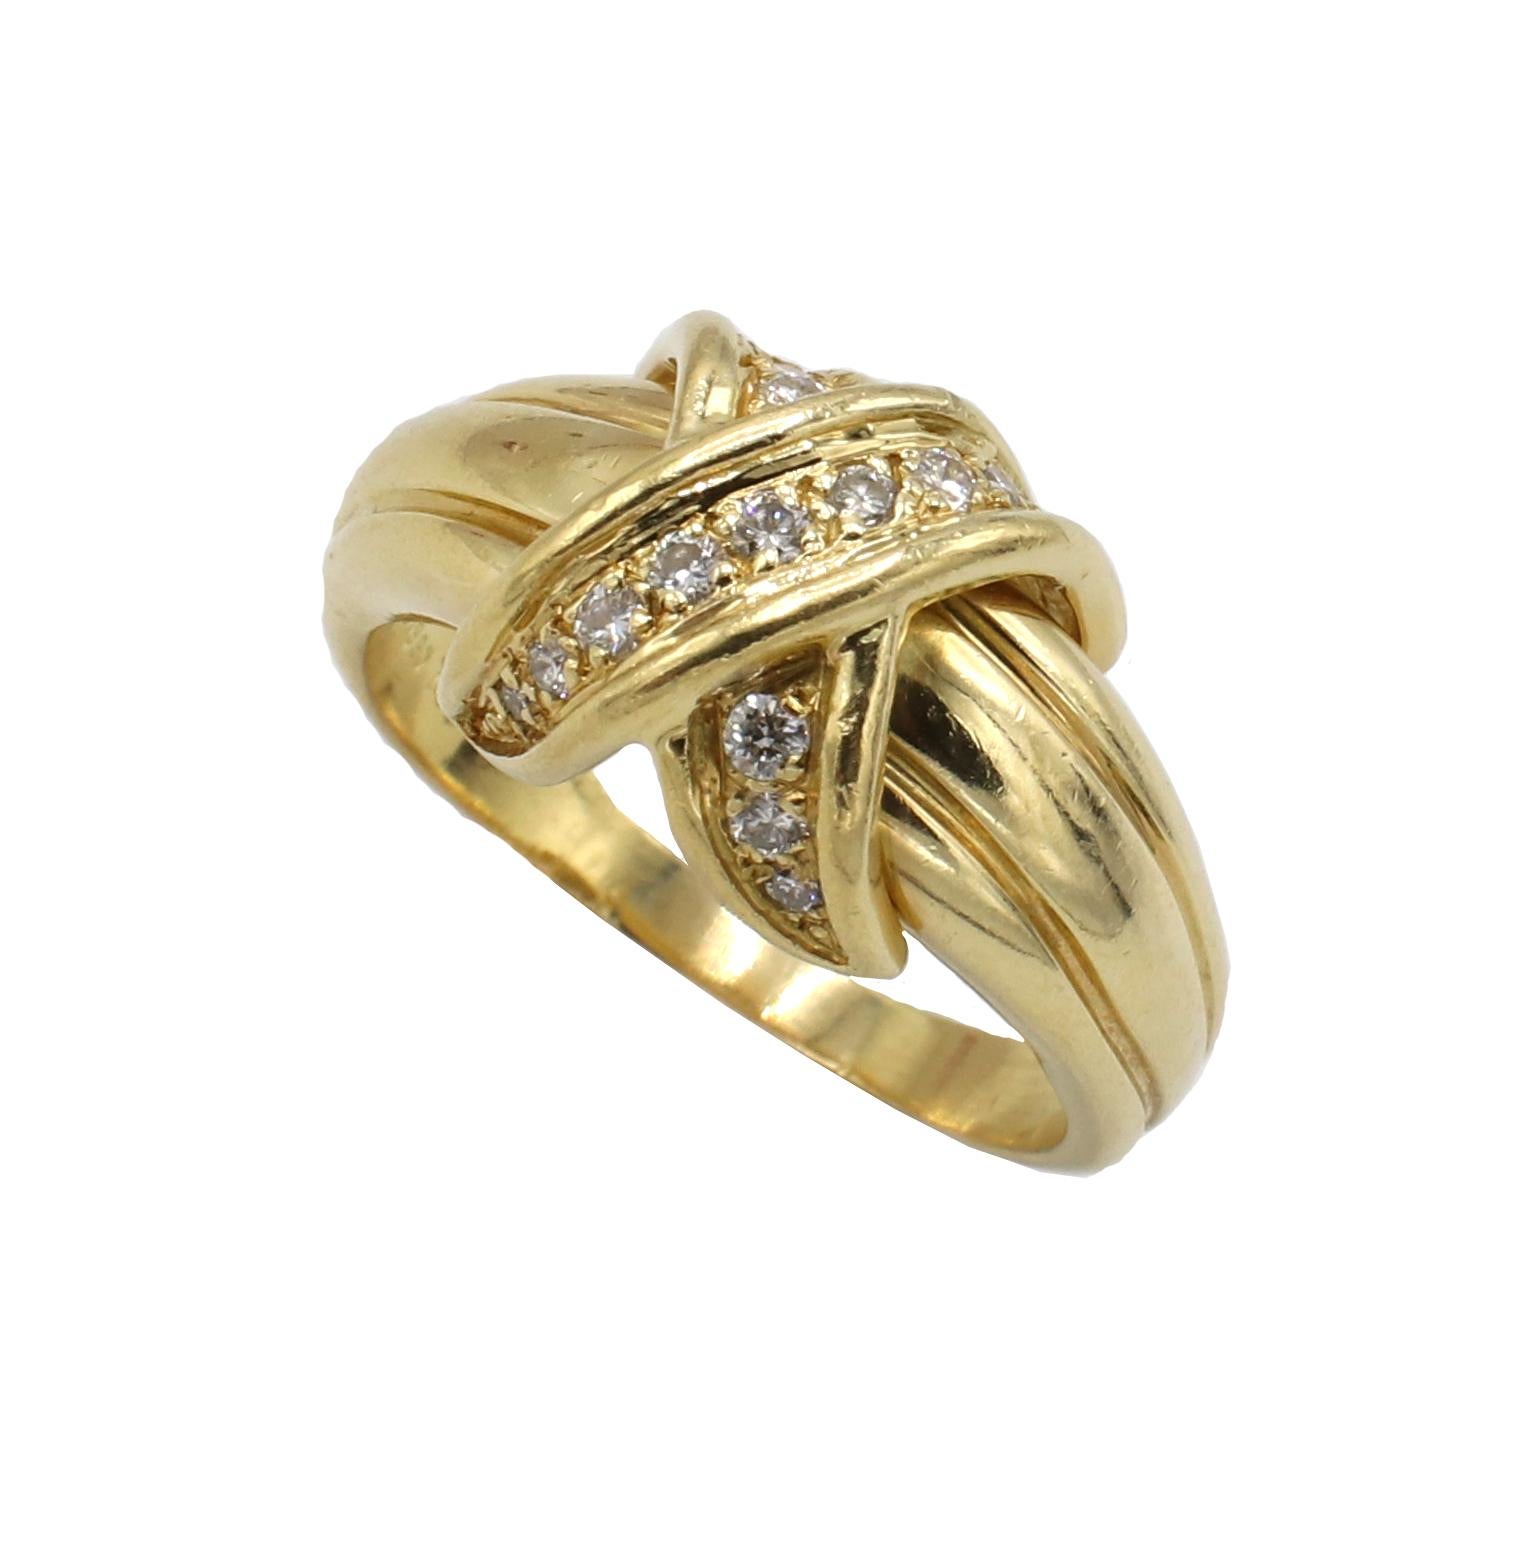 Tiffany & Co. 18 Karat Yellow Gold Diamond Signature X  Ring 
Metal: 18k yellow gold
Weight: 6.37 grams
Diamonds: Approx. .15 CTW G-H VS round diamonds
Size: 5.75 (US)
Height: 6mm
Signed: Tiffany & Co. 1990 750
